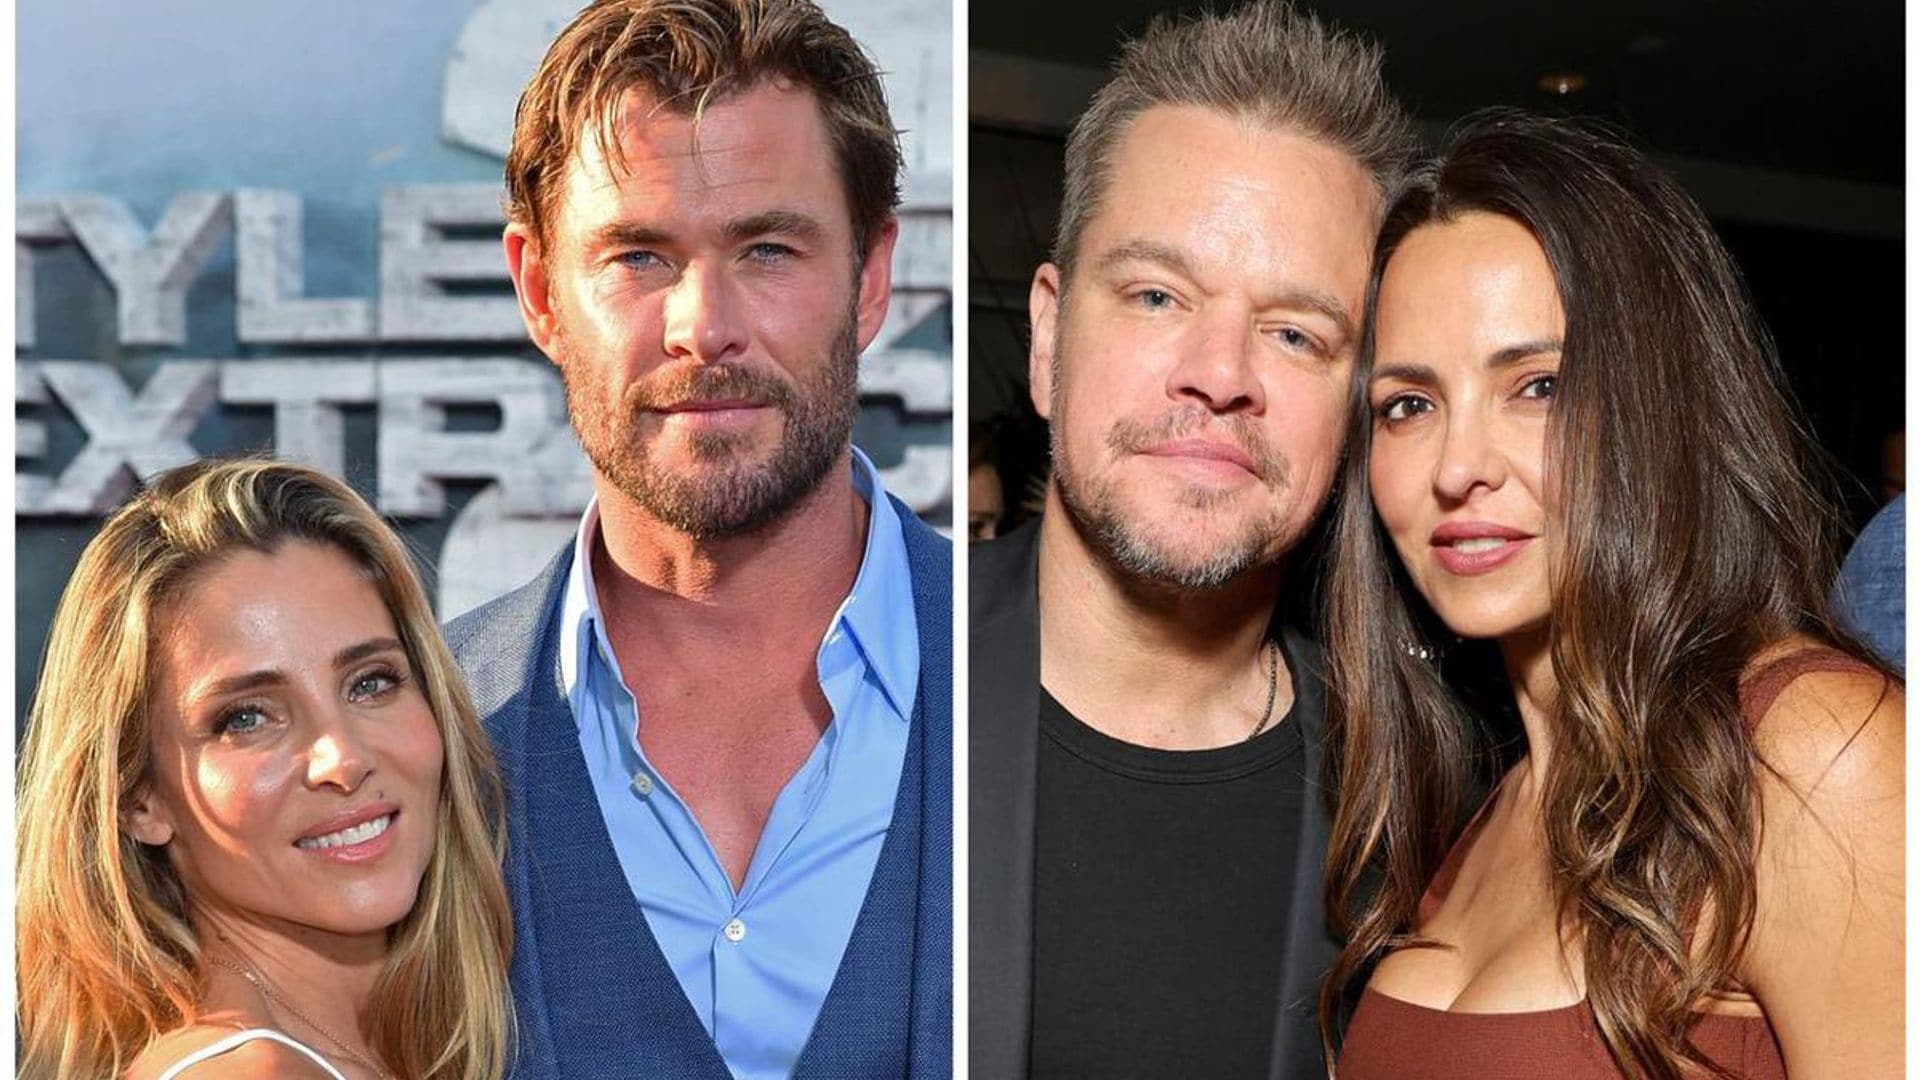 Elsa Pataky and Chris Hemsworth’s close friendship with Matt Damon and his wife